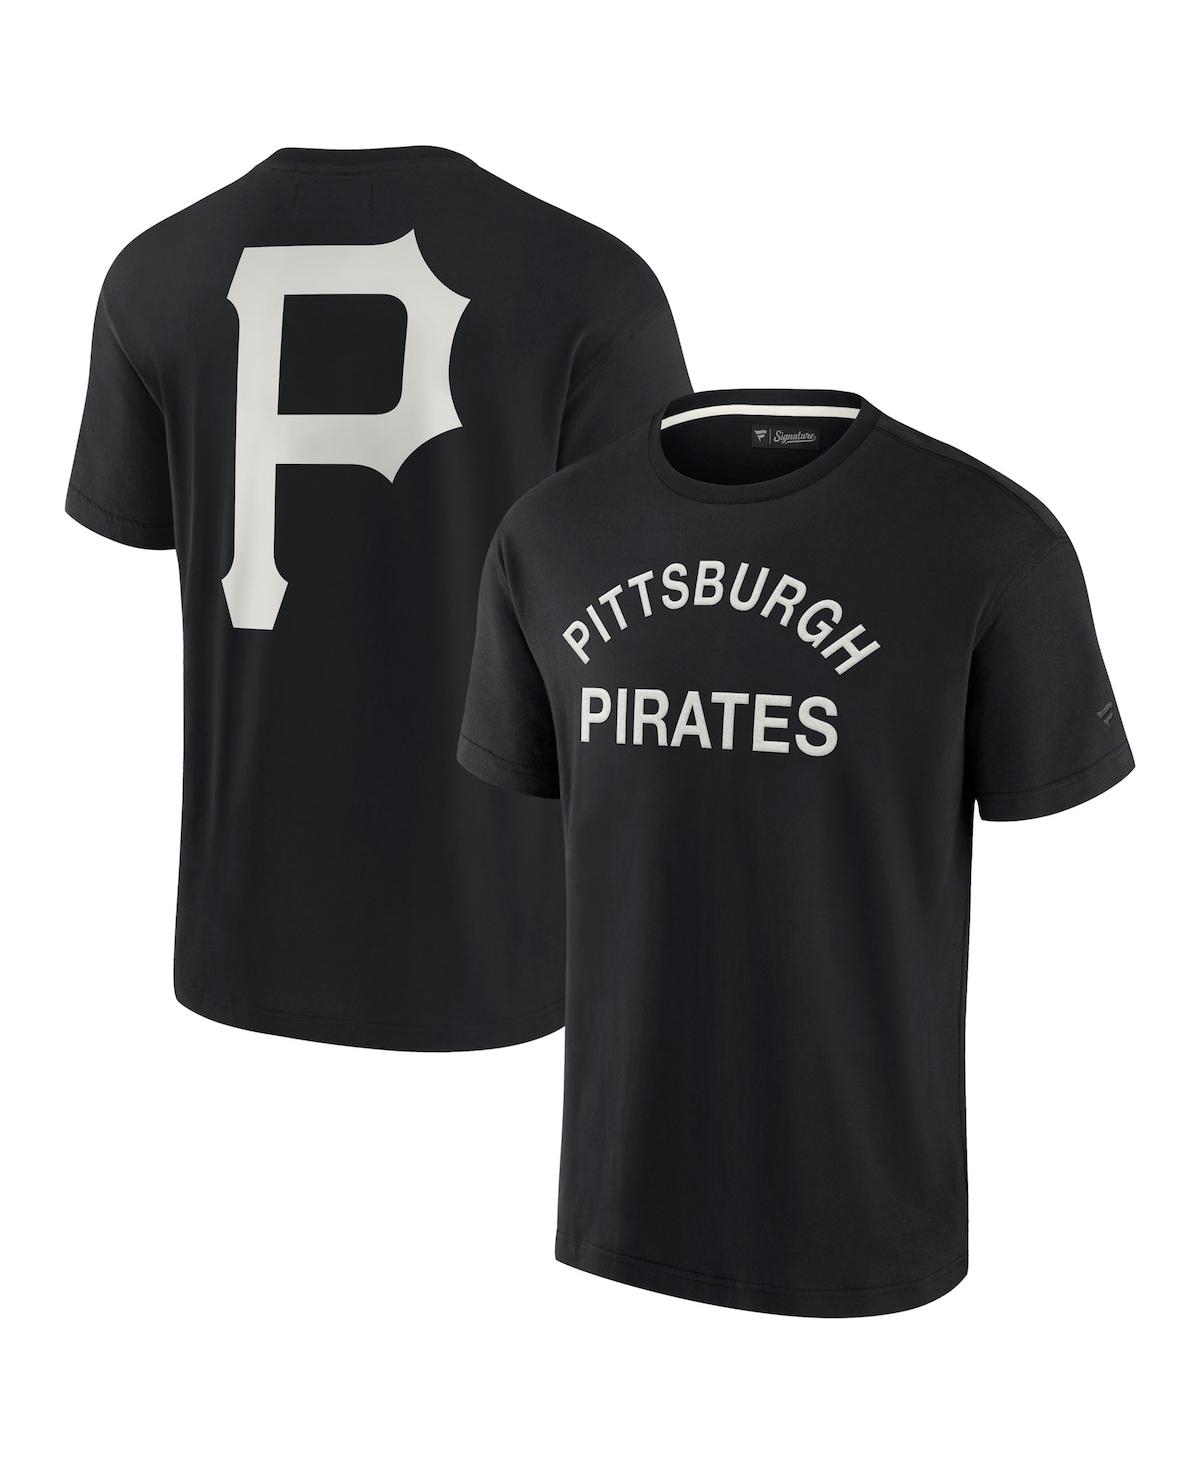 Fanatics Signature Men's And Women's  Black Pittsburgh Pirates Super Soft Short Sleeve T-shirt